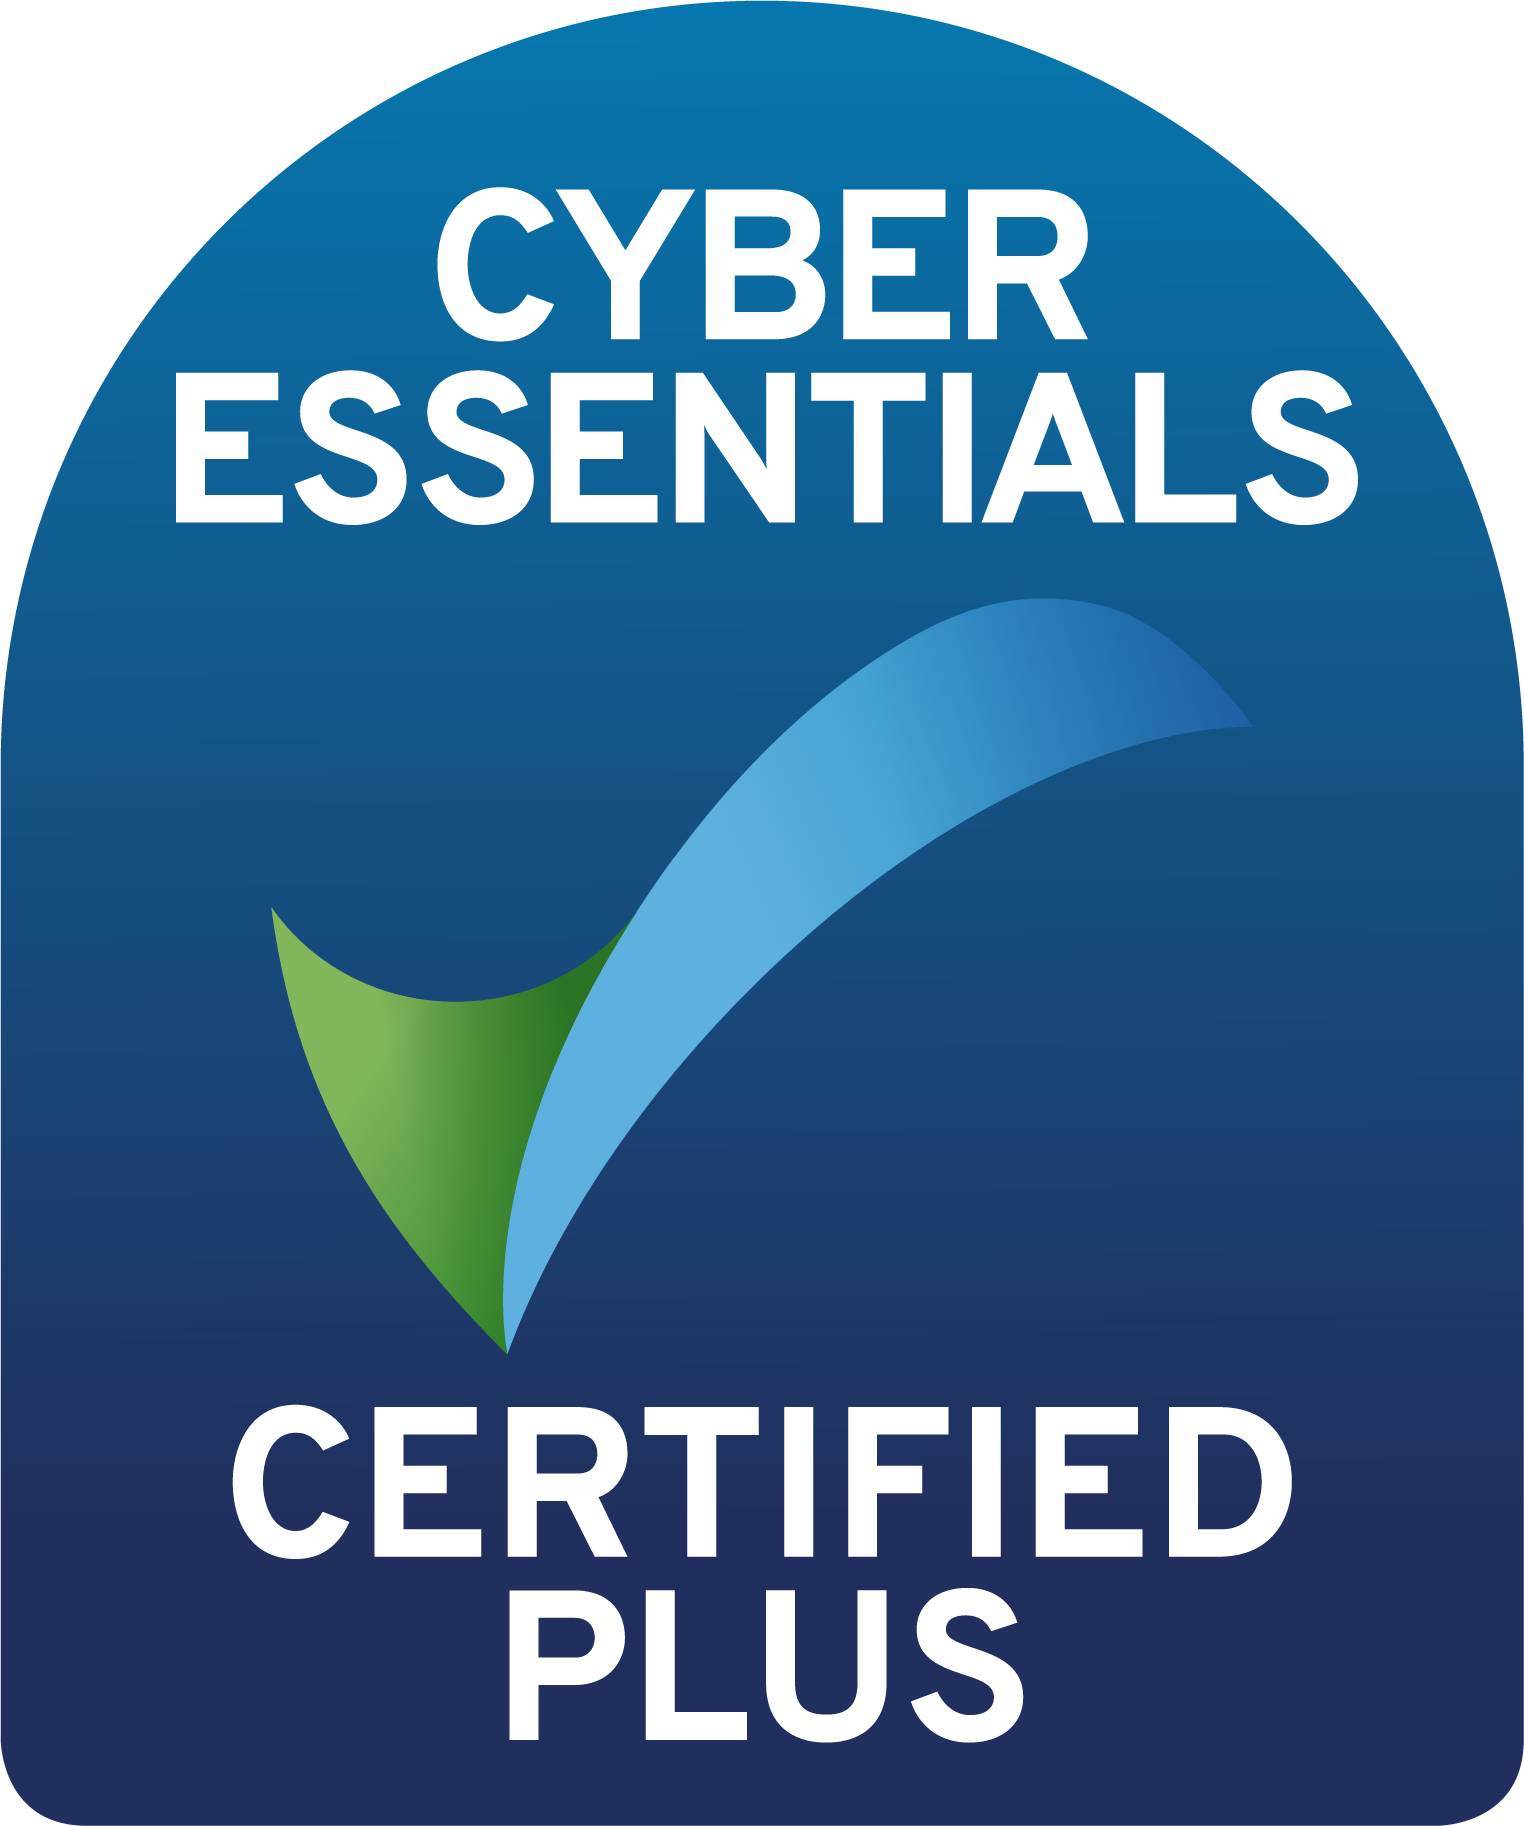 Cyber essentials mark plus certification badge